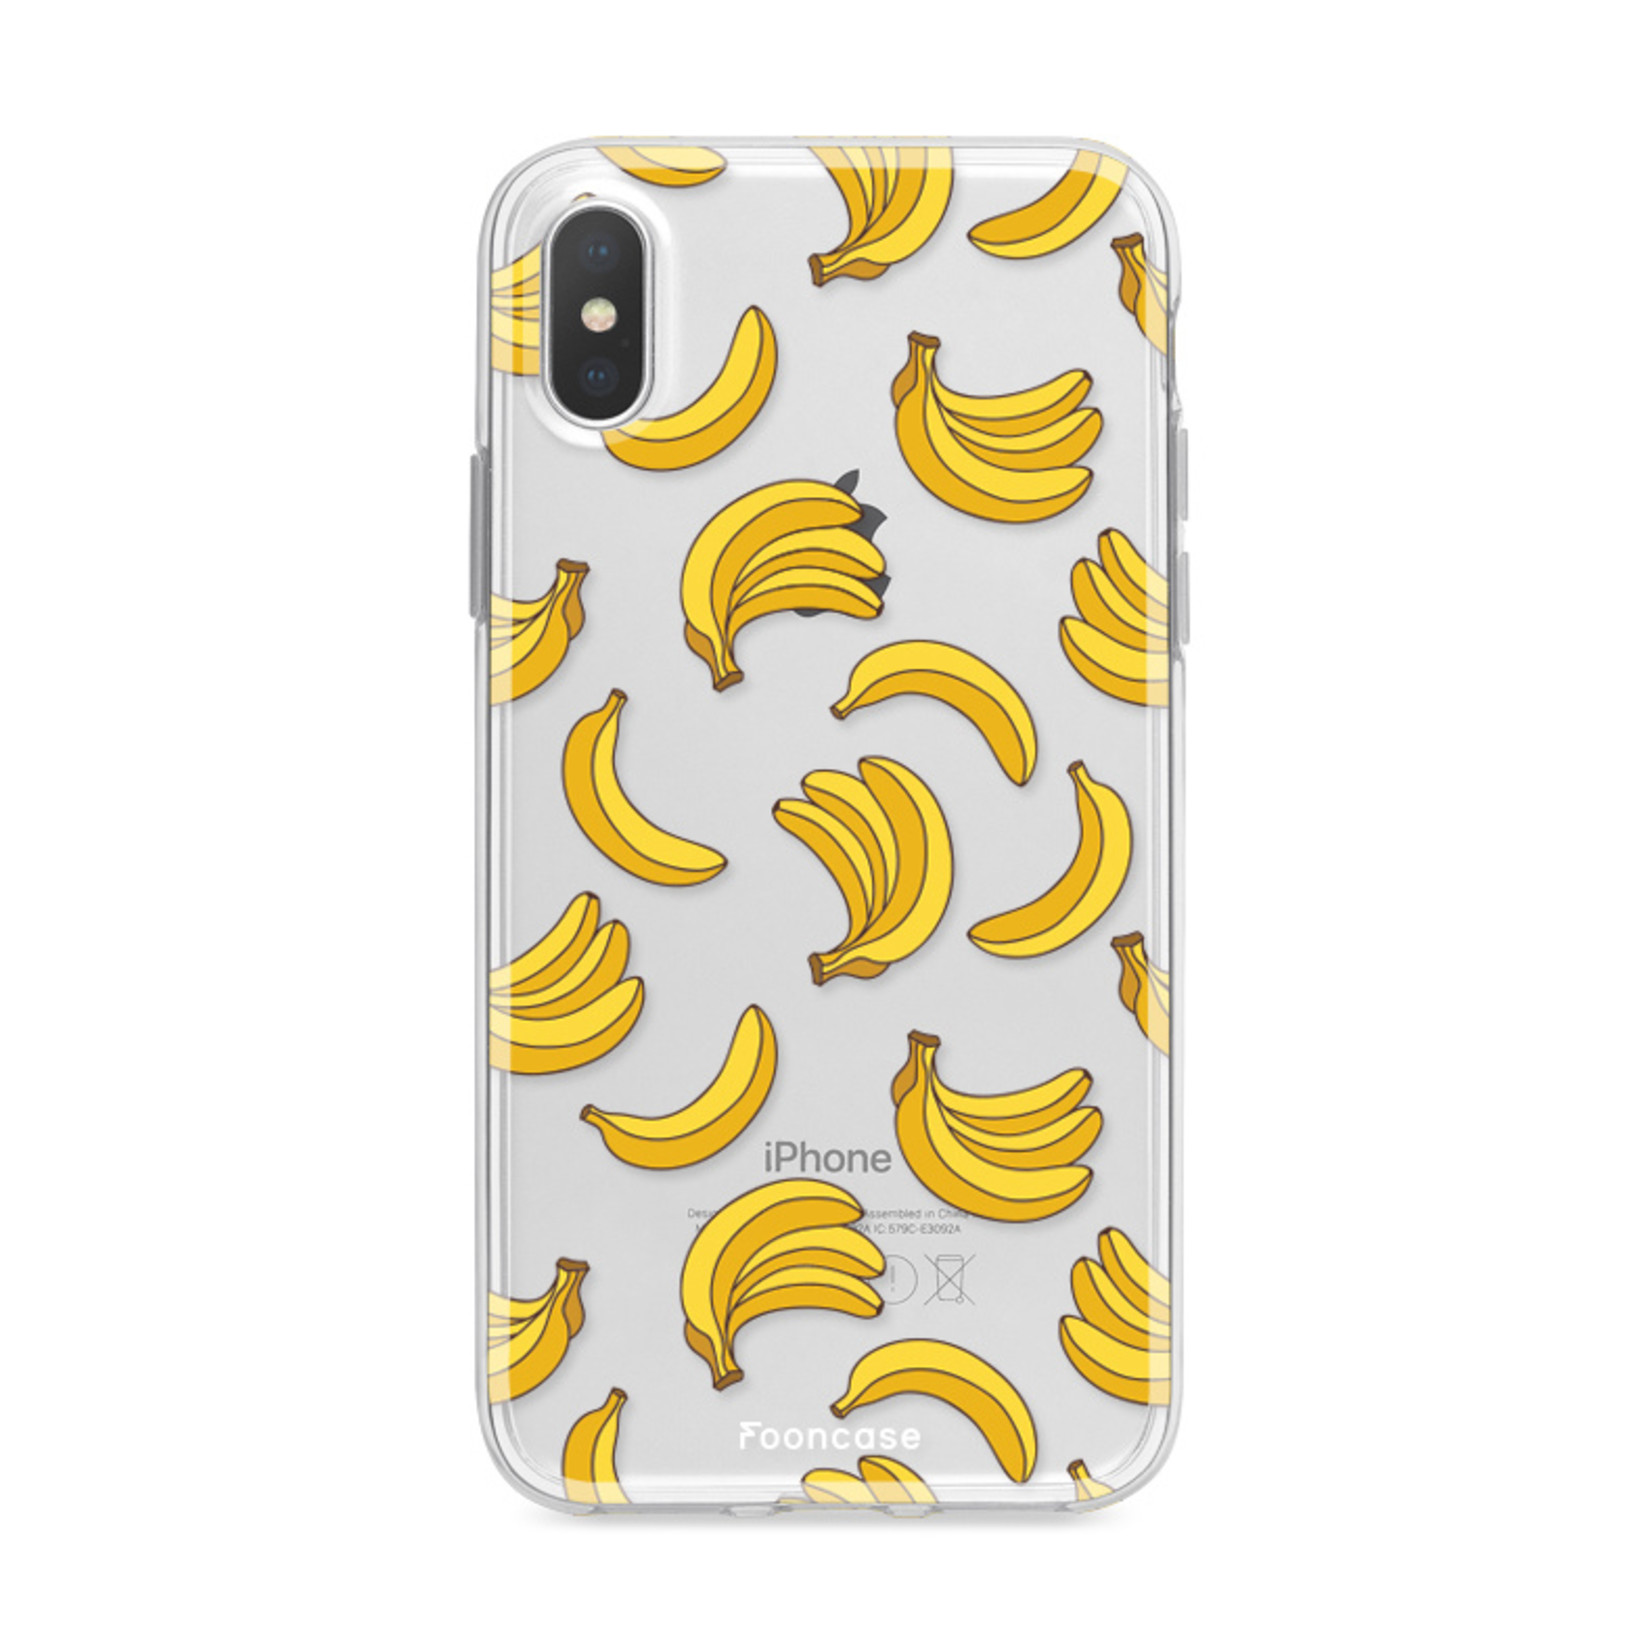 FOONCASE Iphone XS Max Case - Bananas